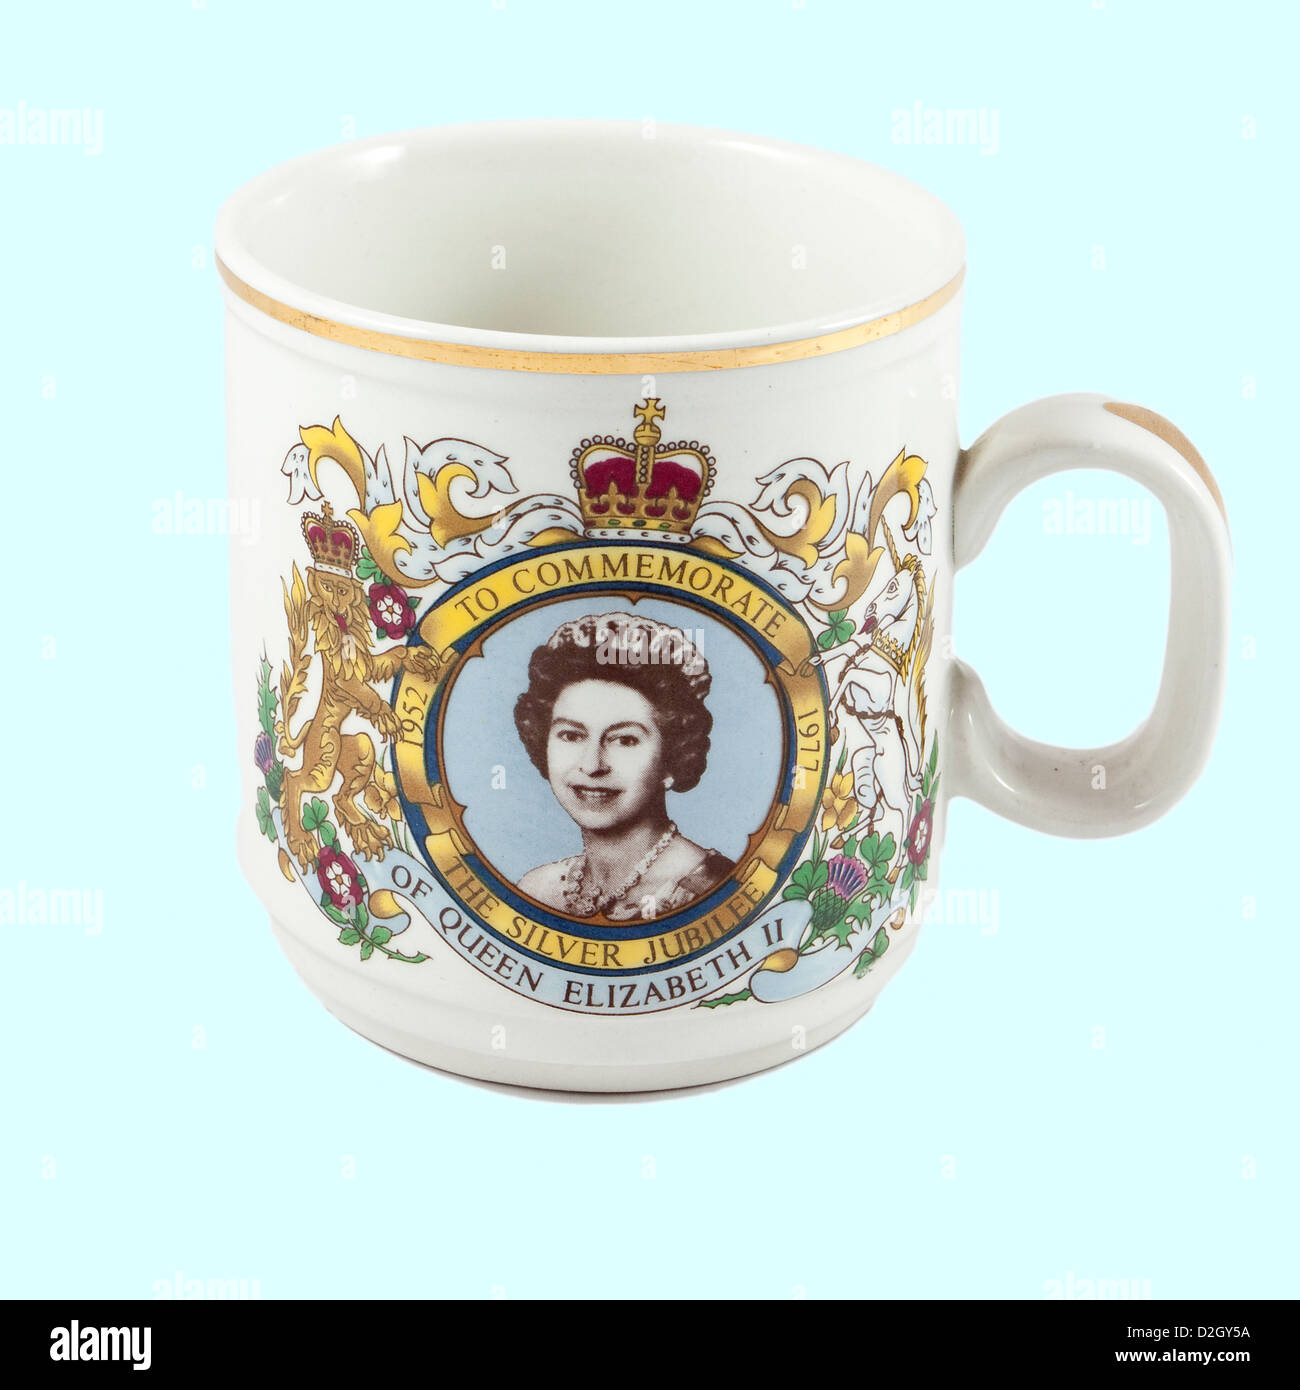 Details about   British Royalty Commemorative Mug Queen Elizabeth Silver Jubilee 